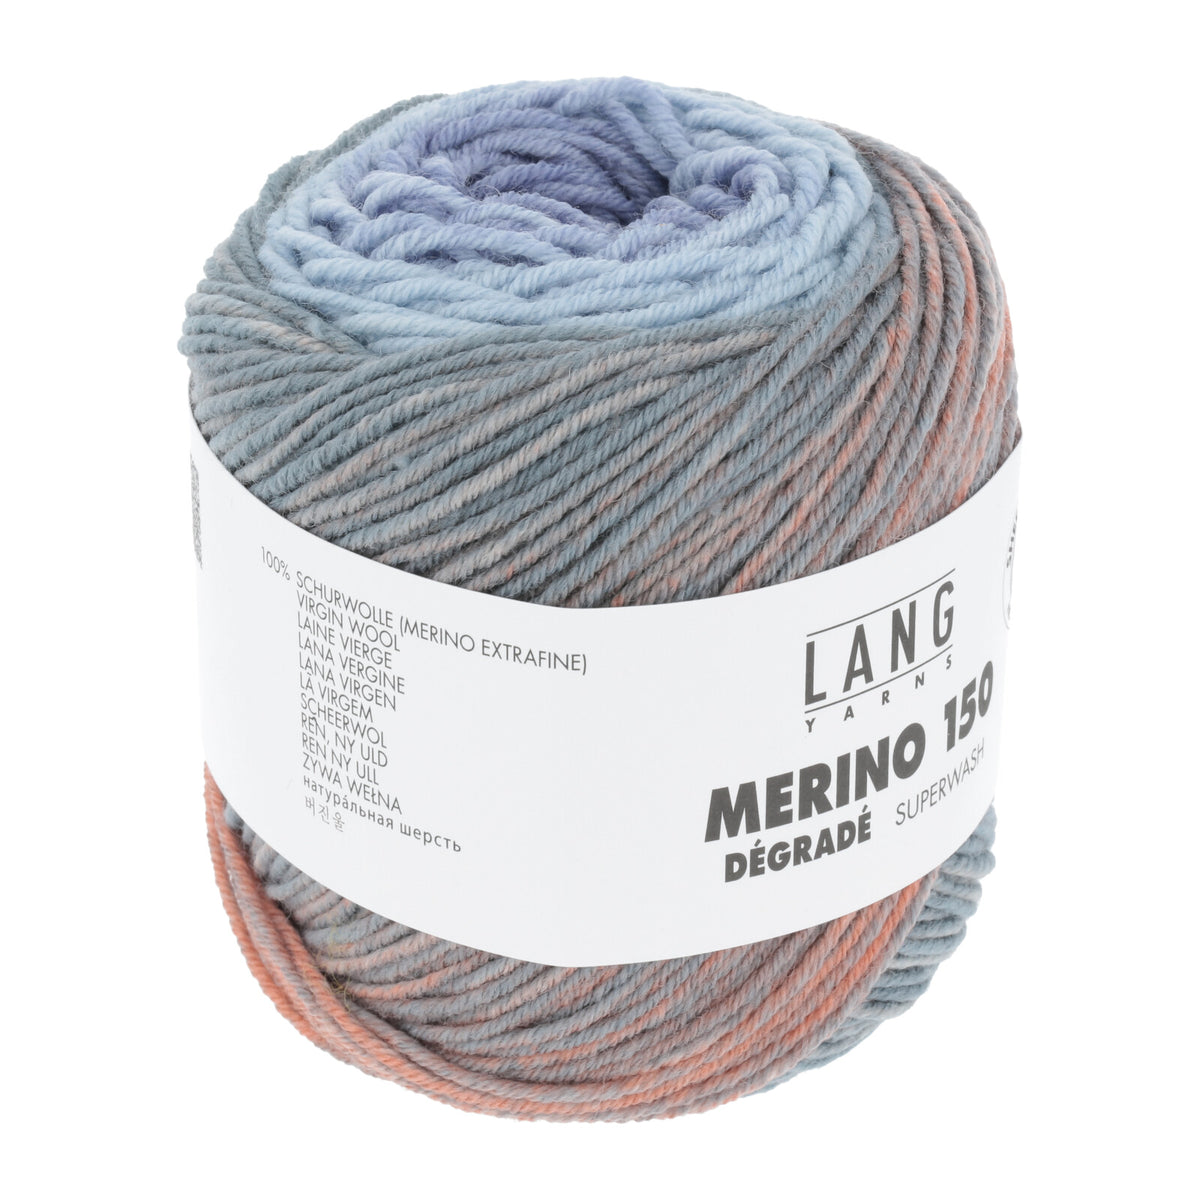 Merino 150, Lang Yarns